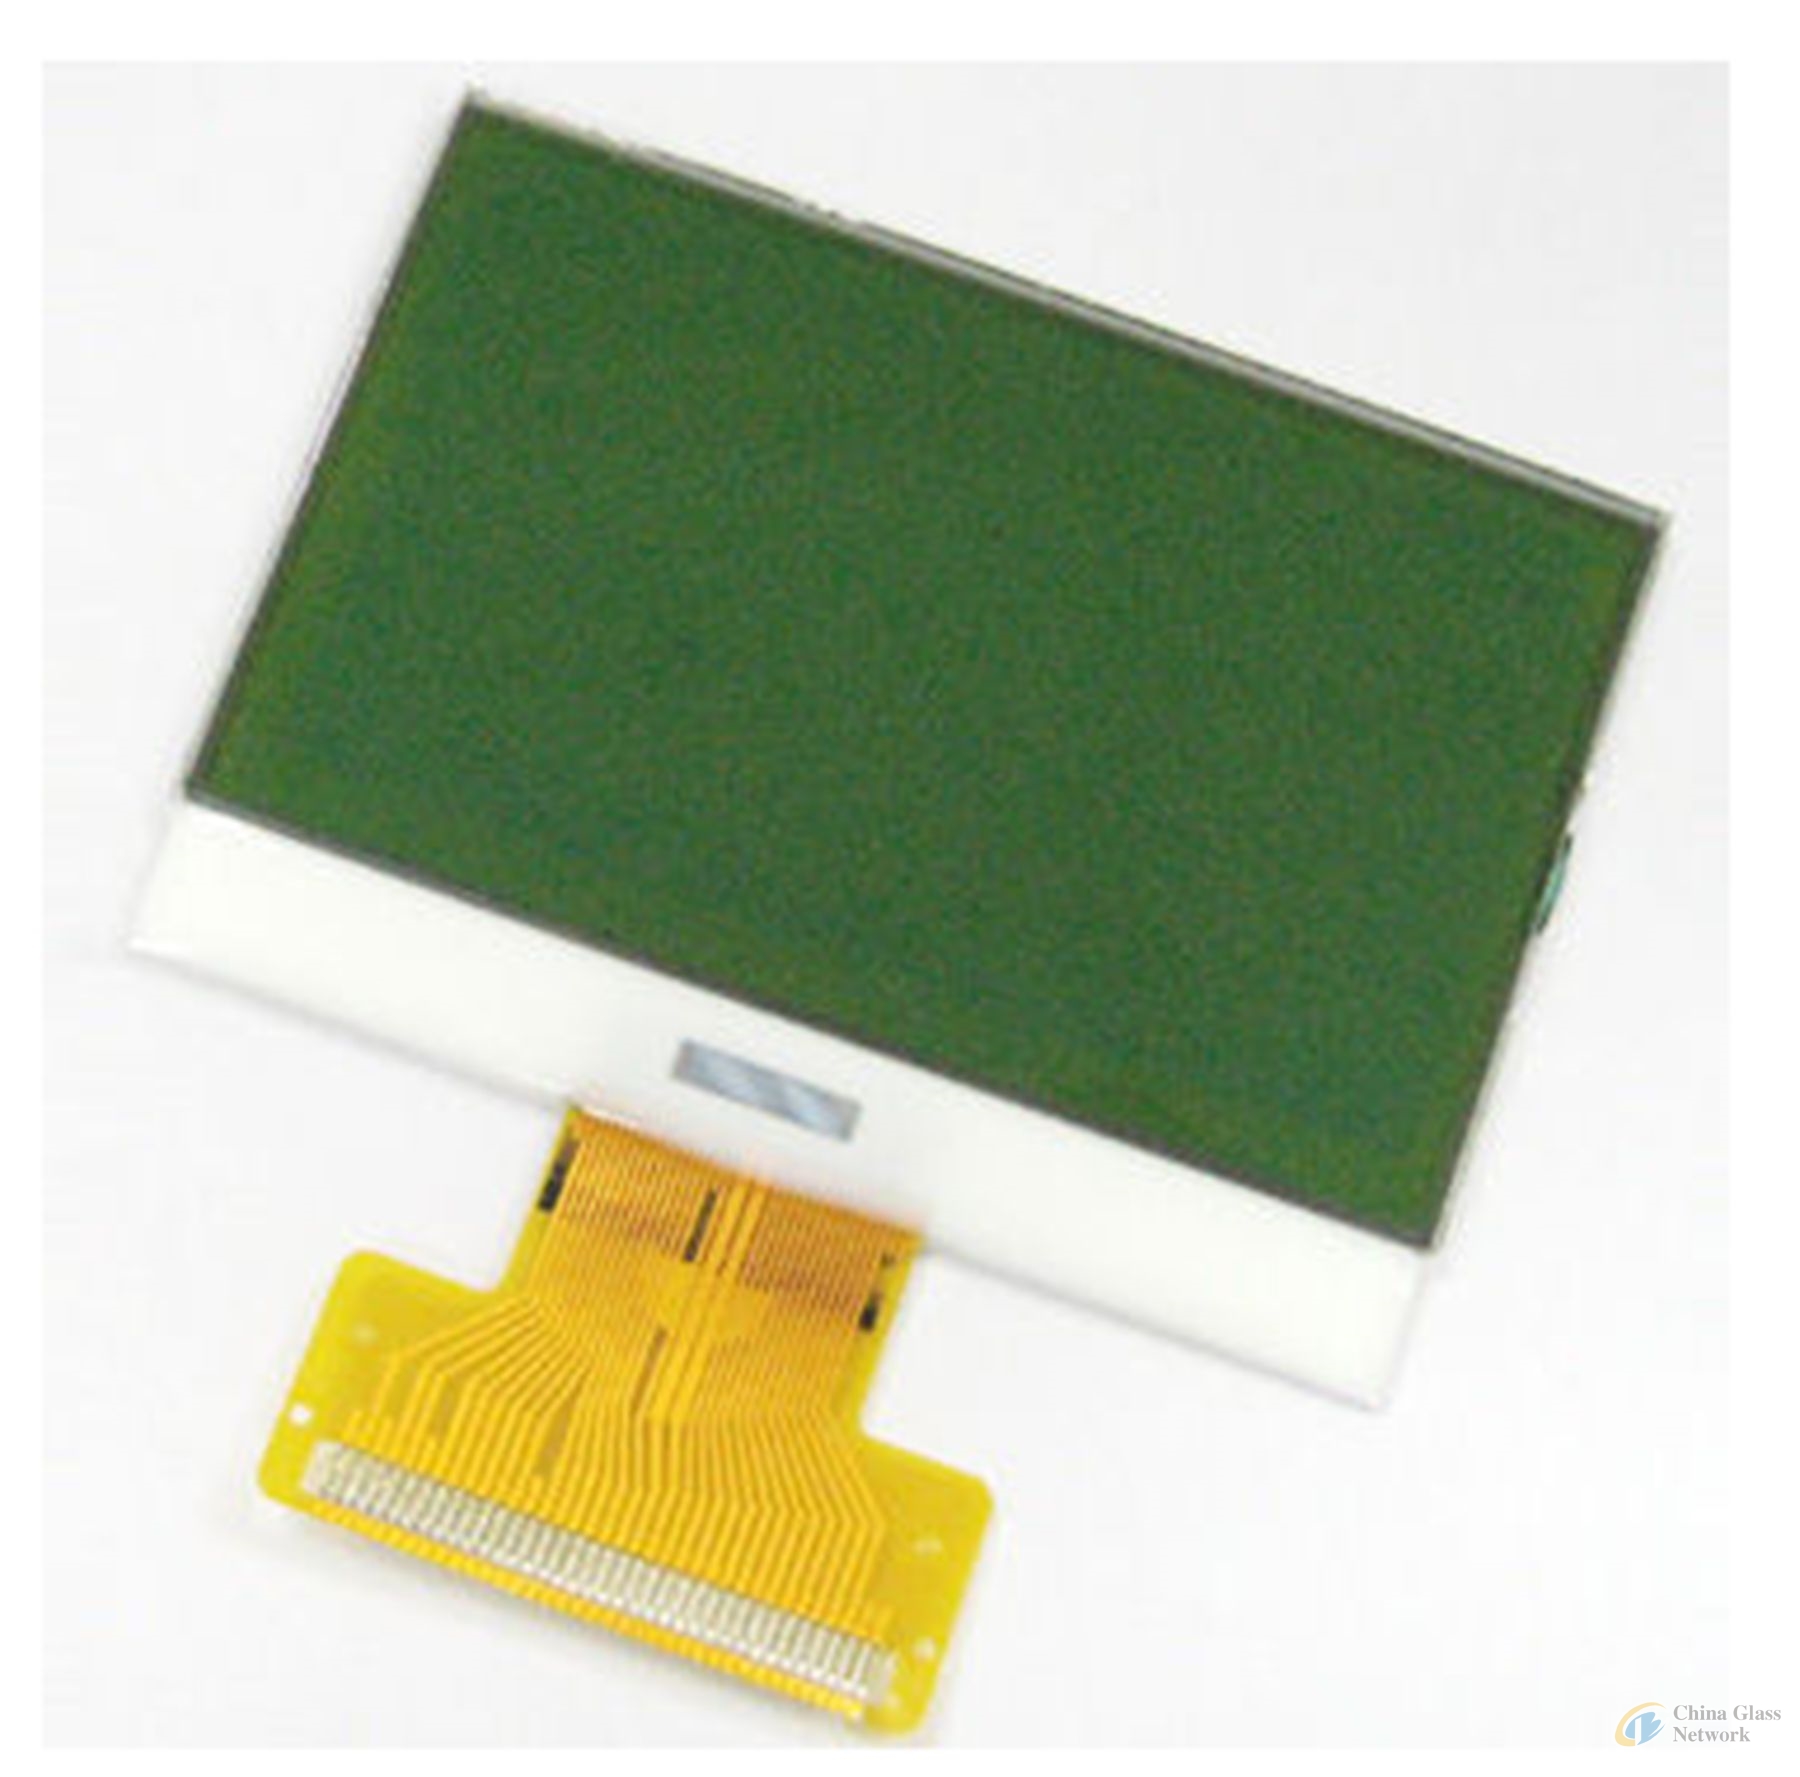 monochrome screen 320160 graphic dot matrix LCD module